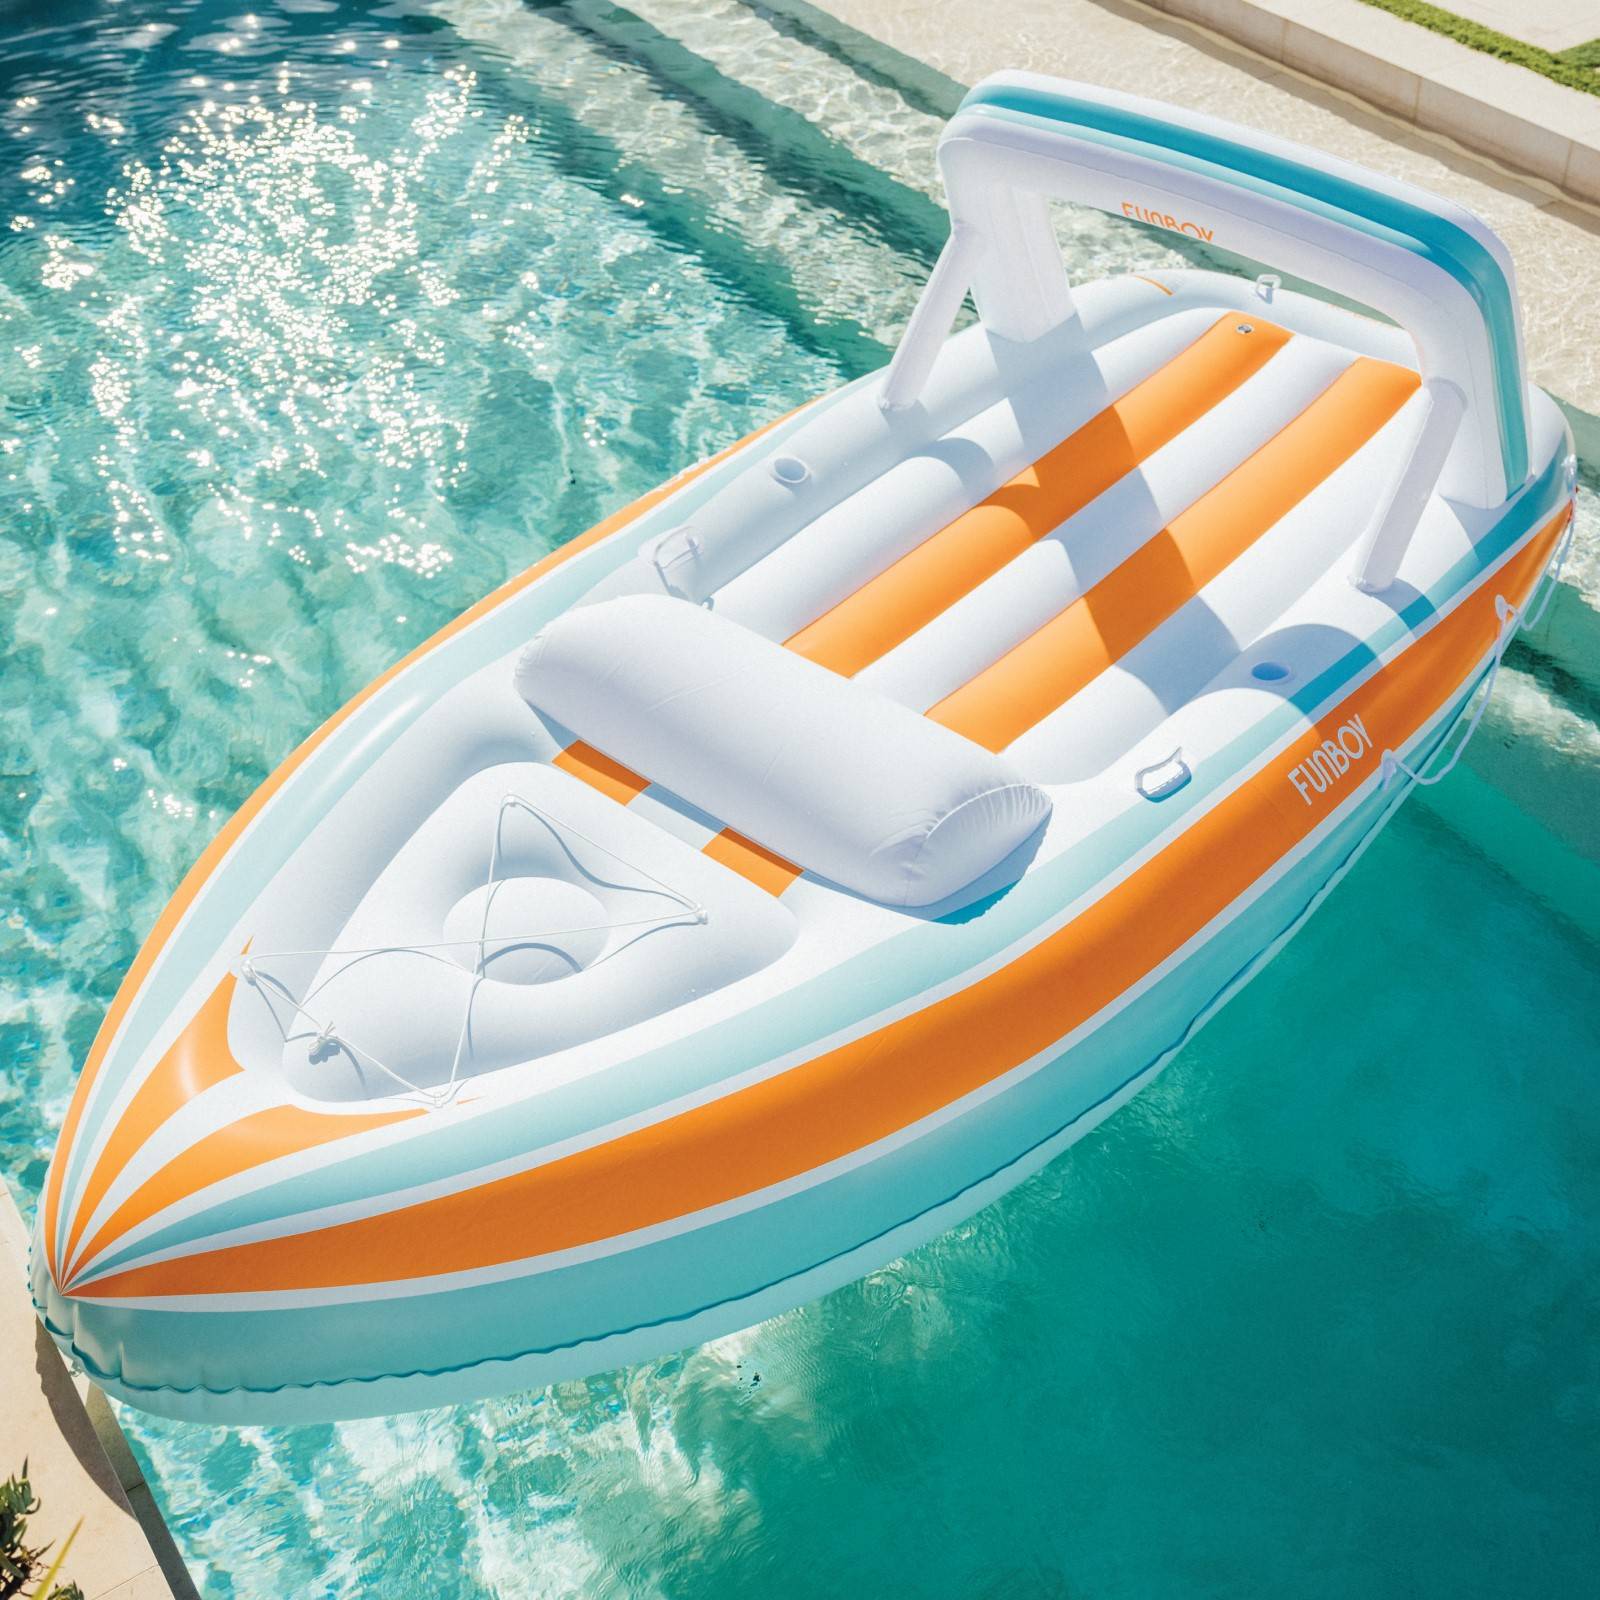 Boat Pool Float Raft Kids Ride On Toy Adult Lounge BIG Swim Beach Water 